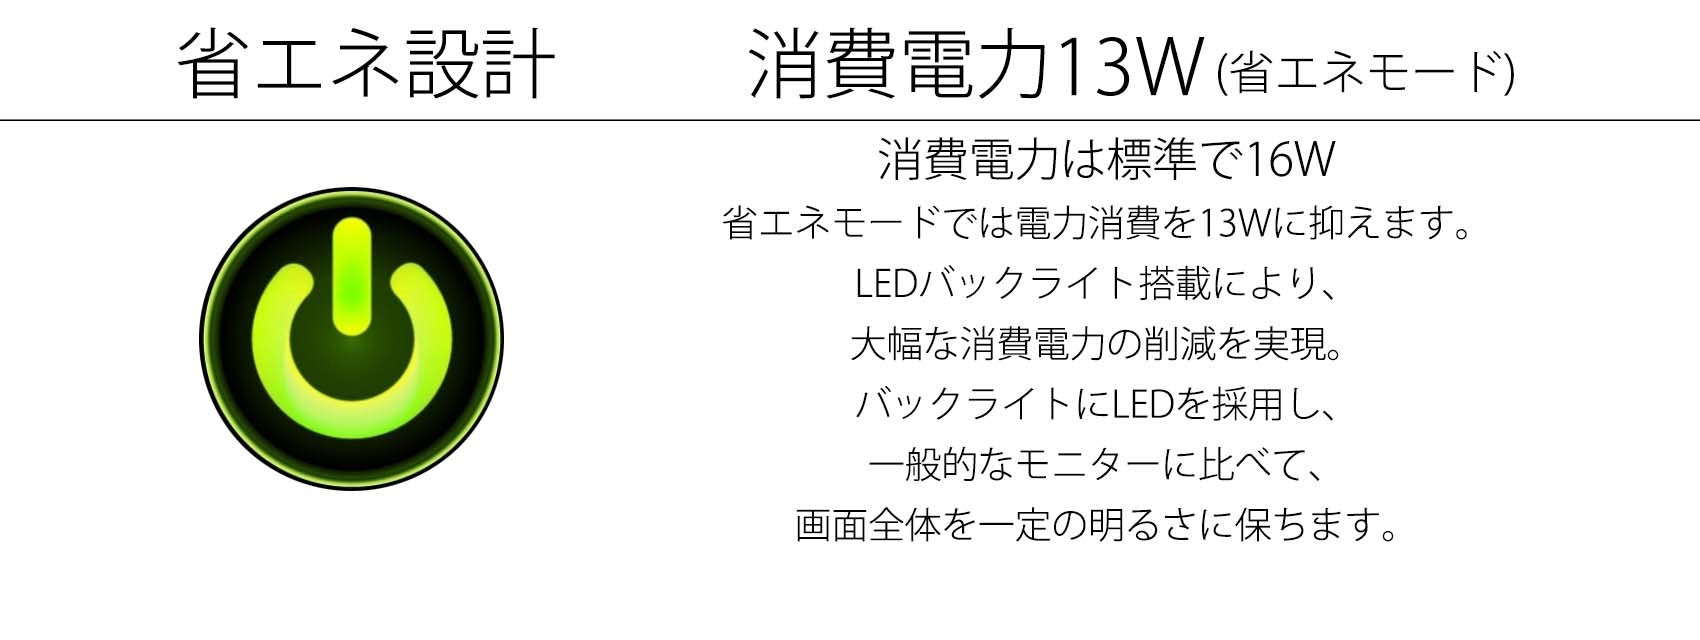 JAPANNEXT 23.6型 USB Type-C(65給電対応) フルHD(1920x1080) 液晶